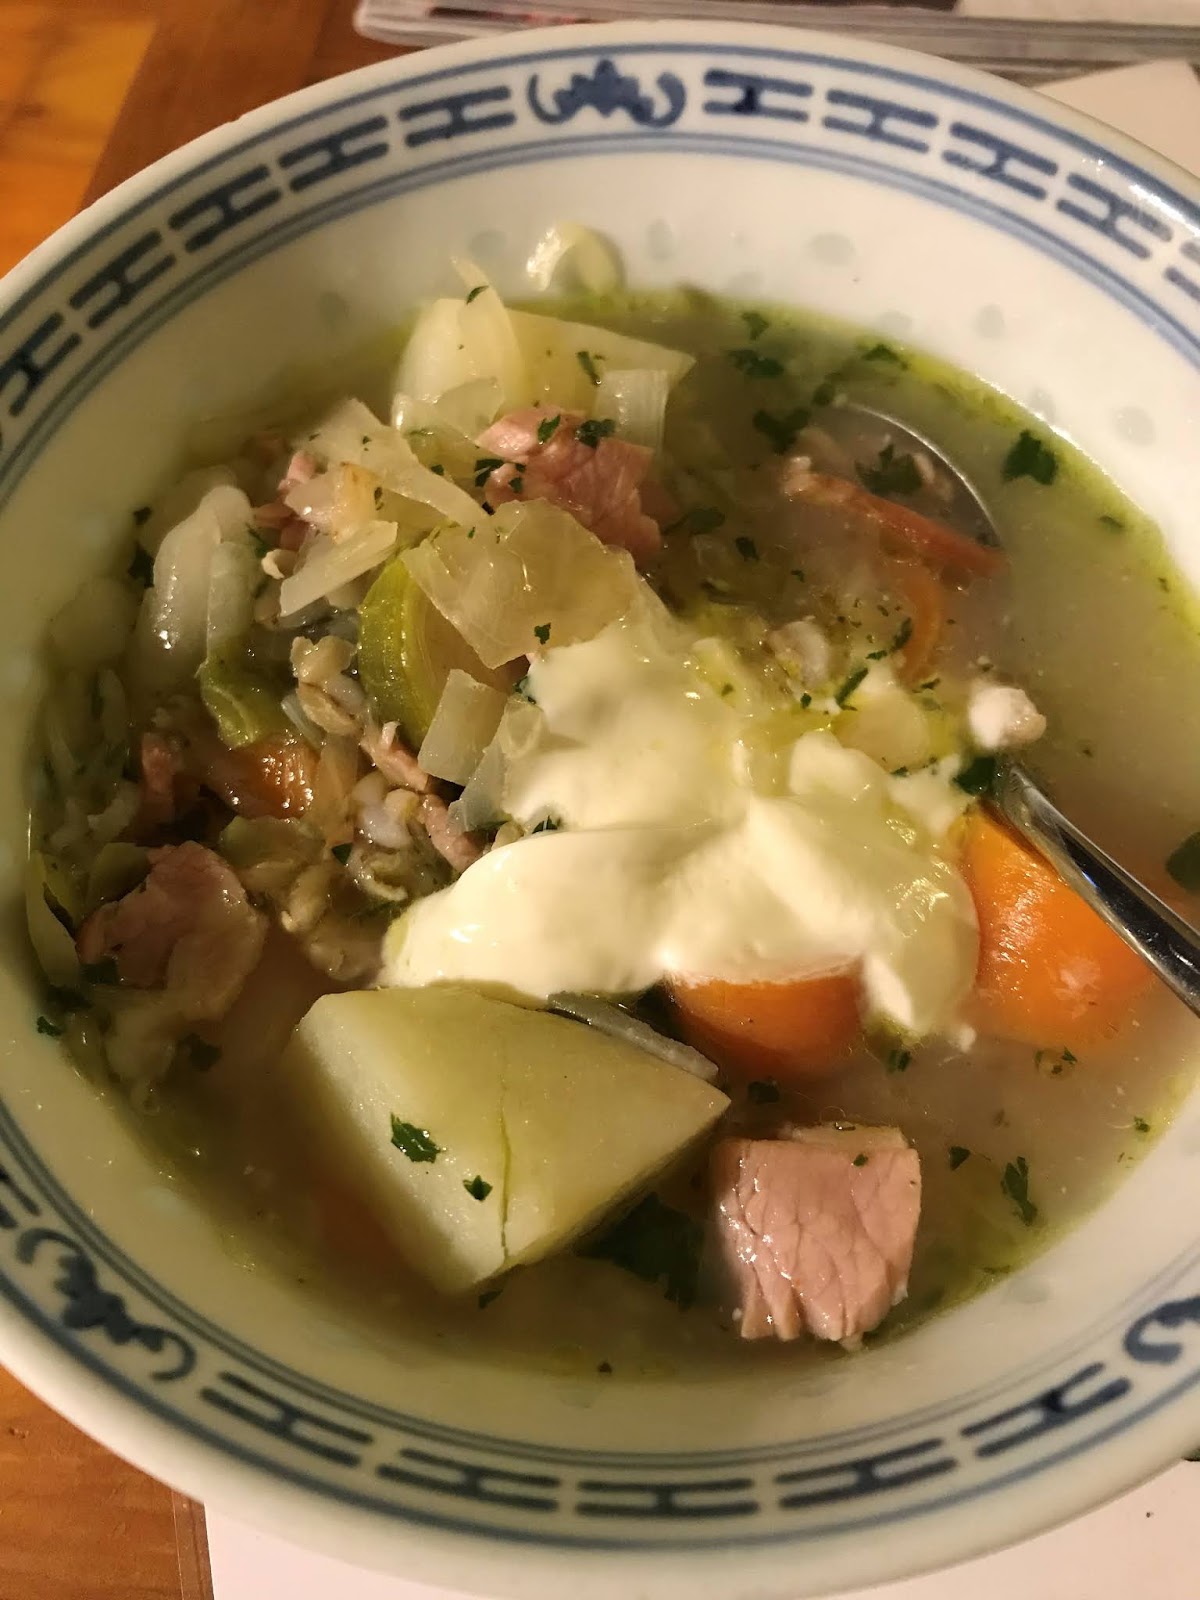 sherrys pickings: Sauerkraut Soup